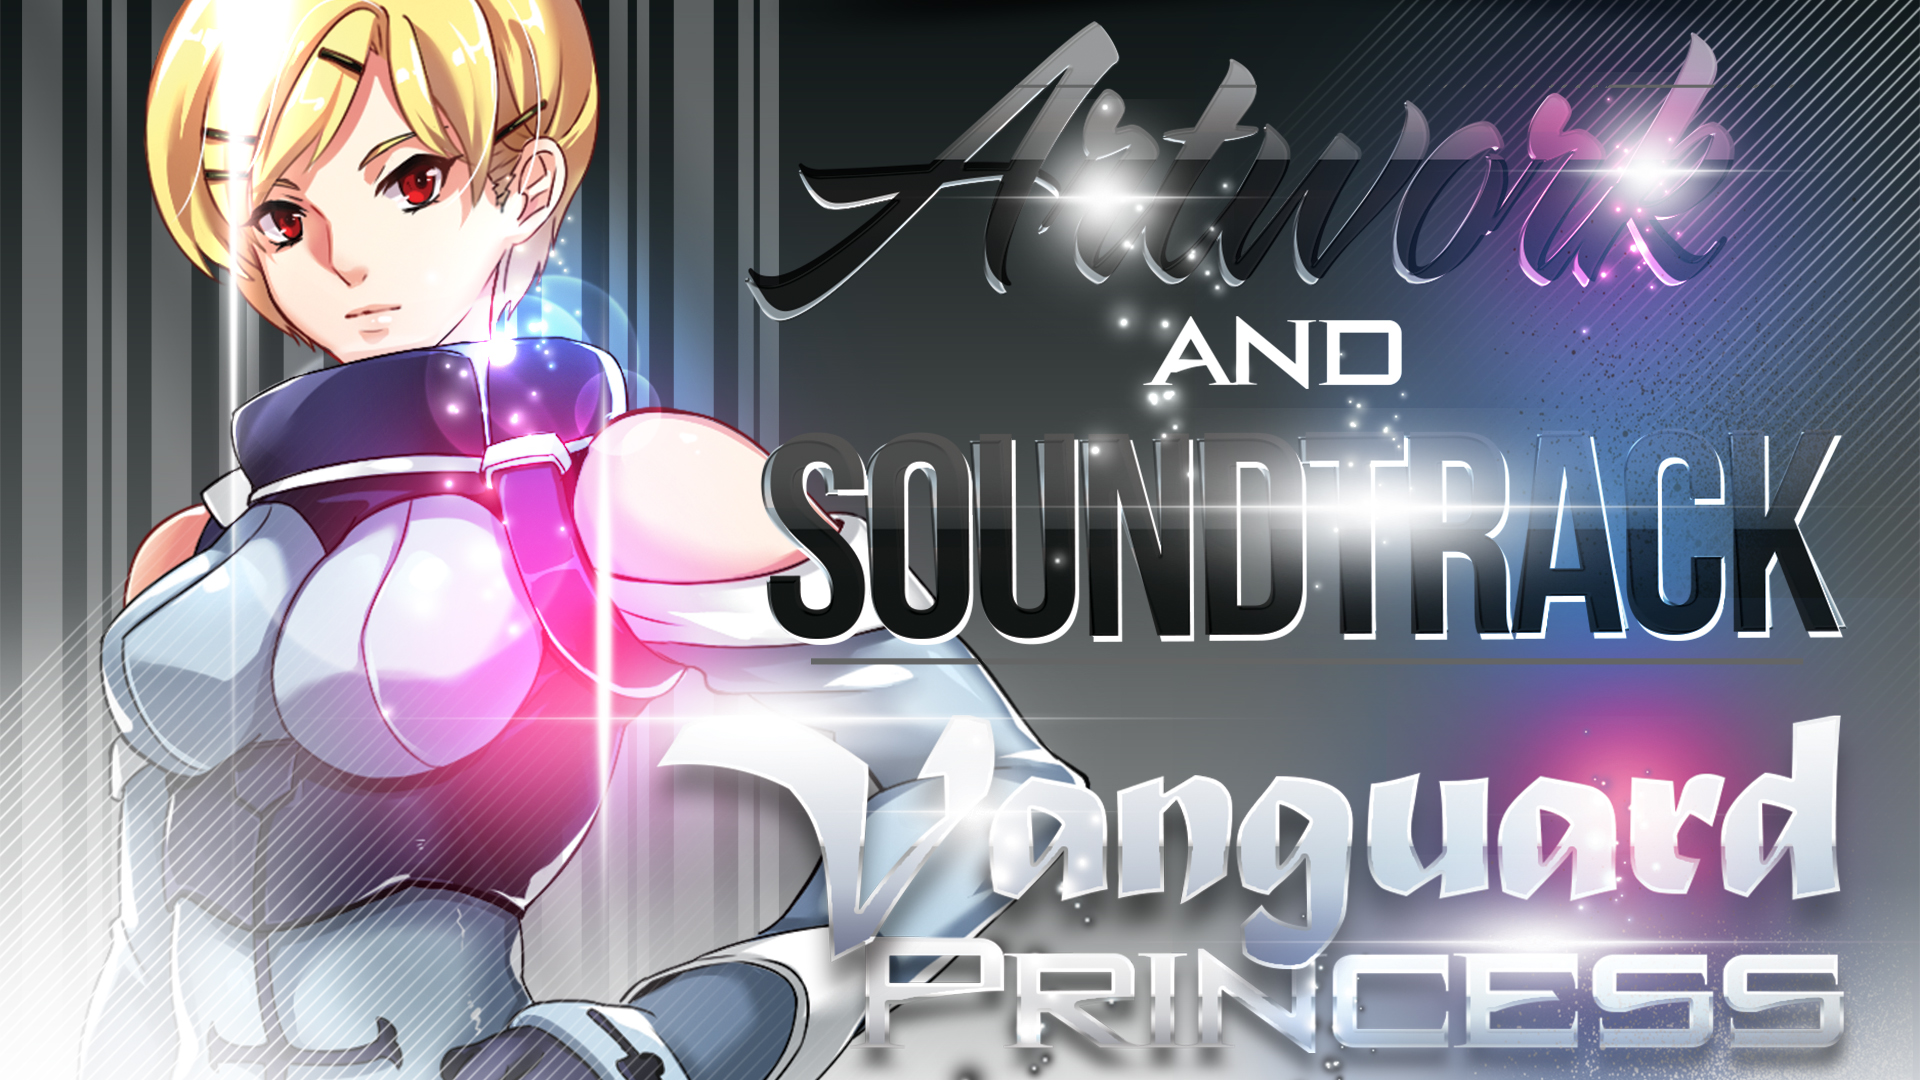 Vanguard Princess - Artwork and Soundtrack DLC Steam CD Key, $1.41